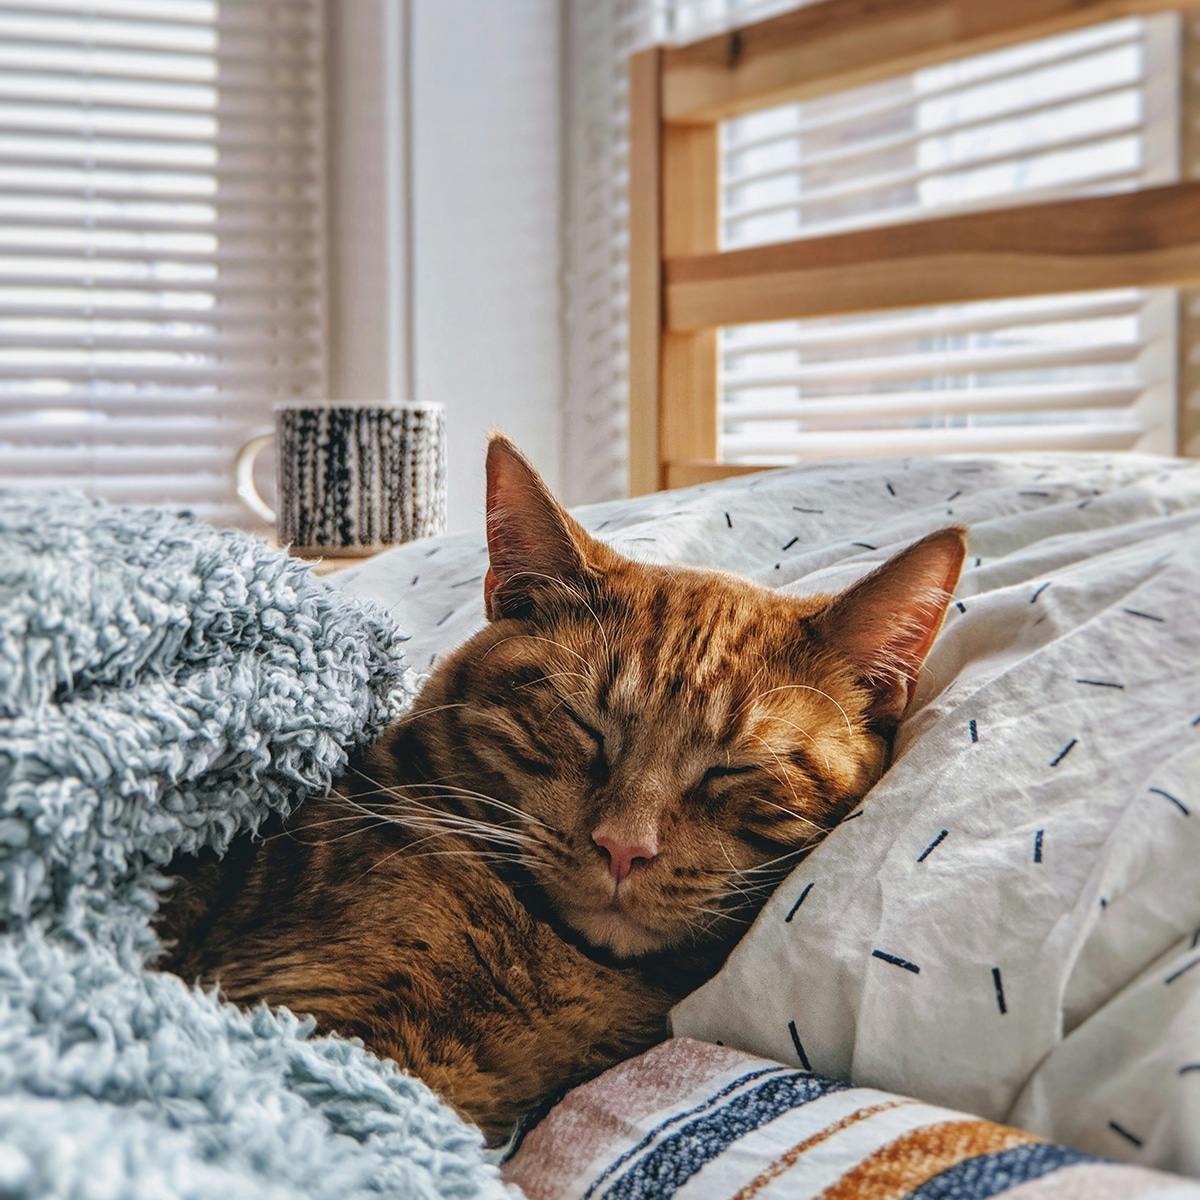 sleeping orange striped cat tucked in bed